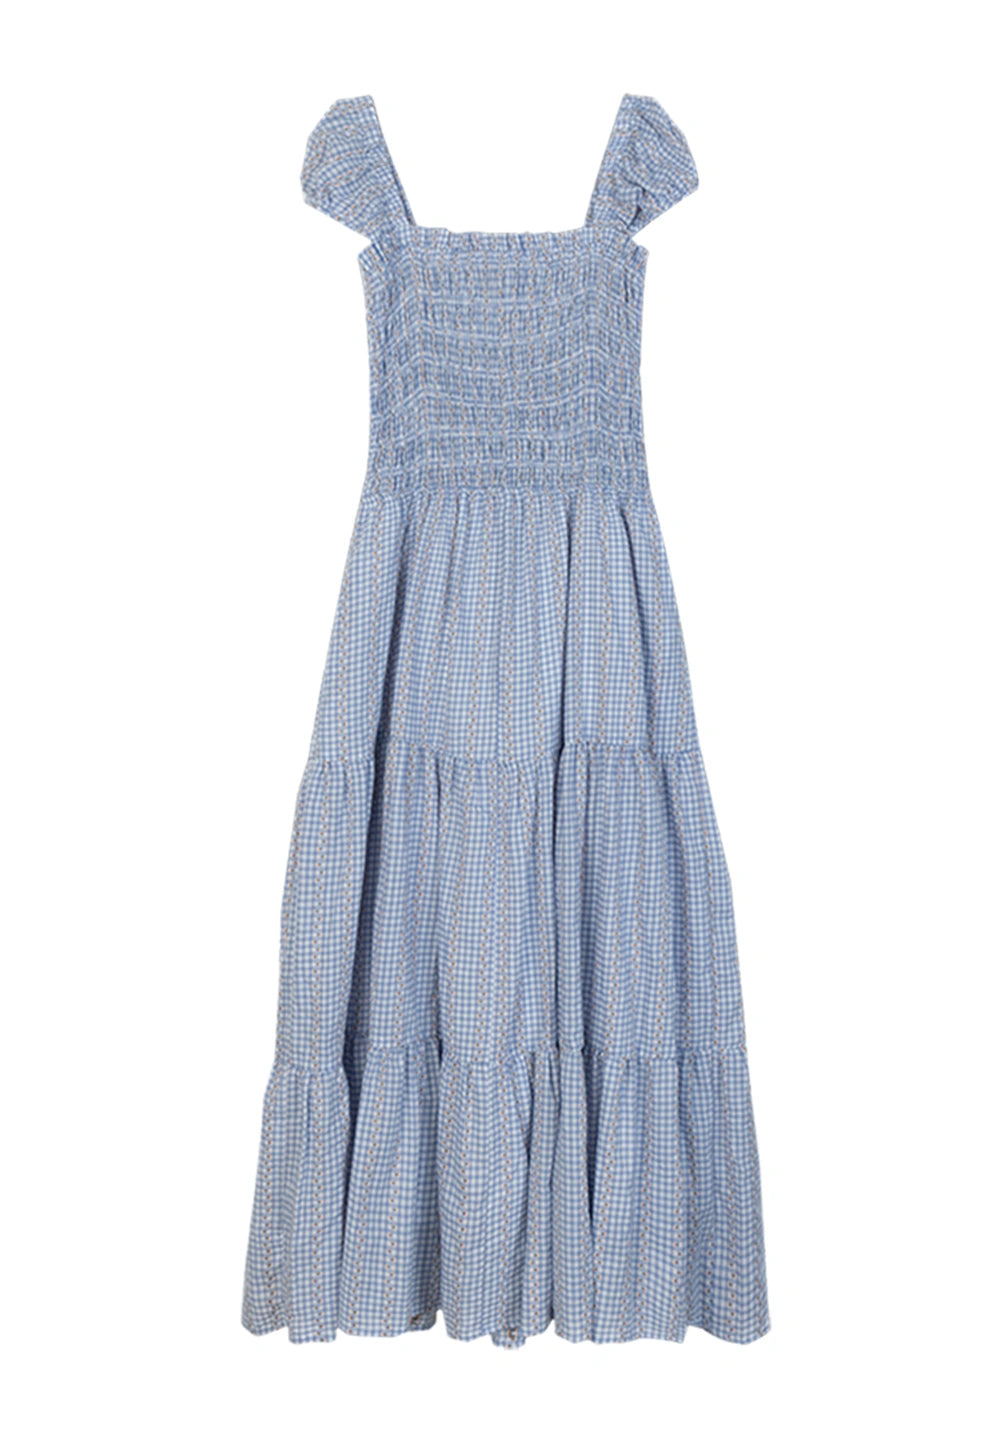 Vintage Blue Gingham Smocked Midi Dress with Ruffled Hem - Women's Summer Casual Dress